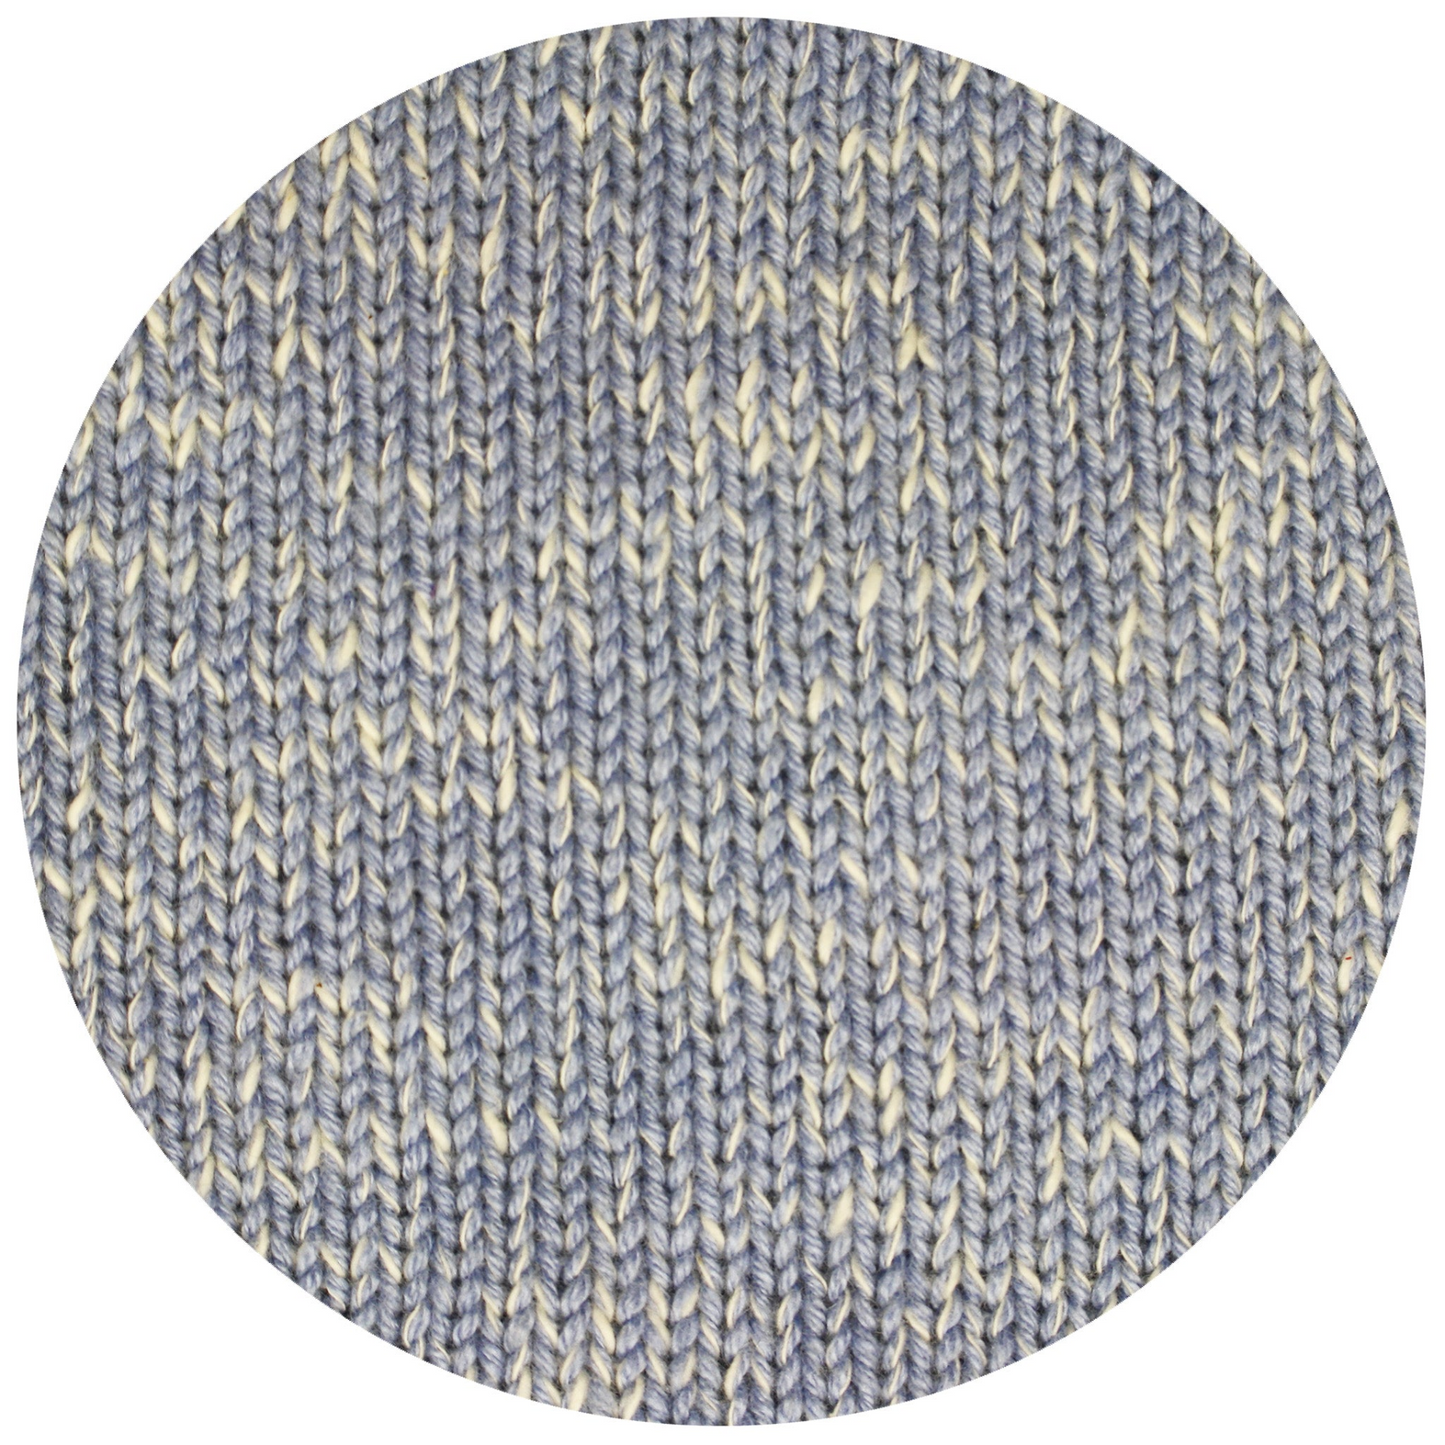 Melange Cashmere V Neck Sweater in Jersey Stitch Blue White